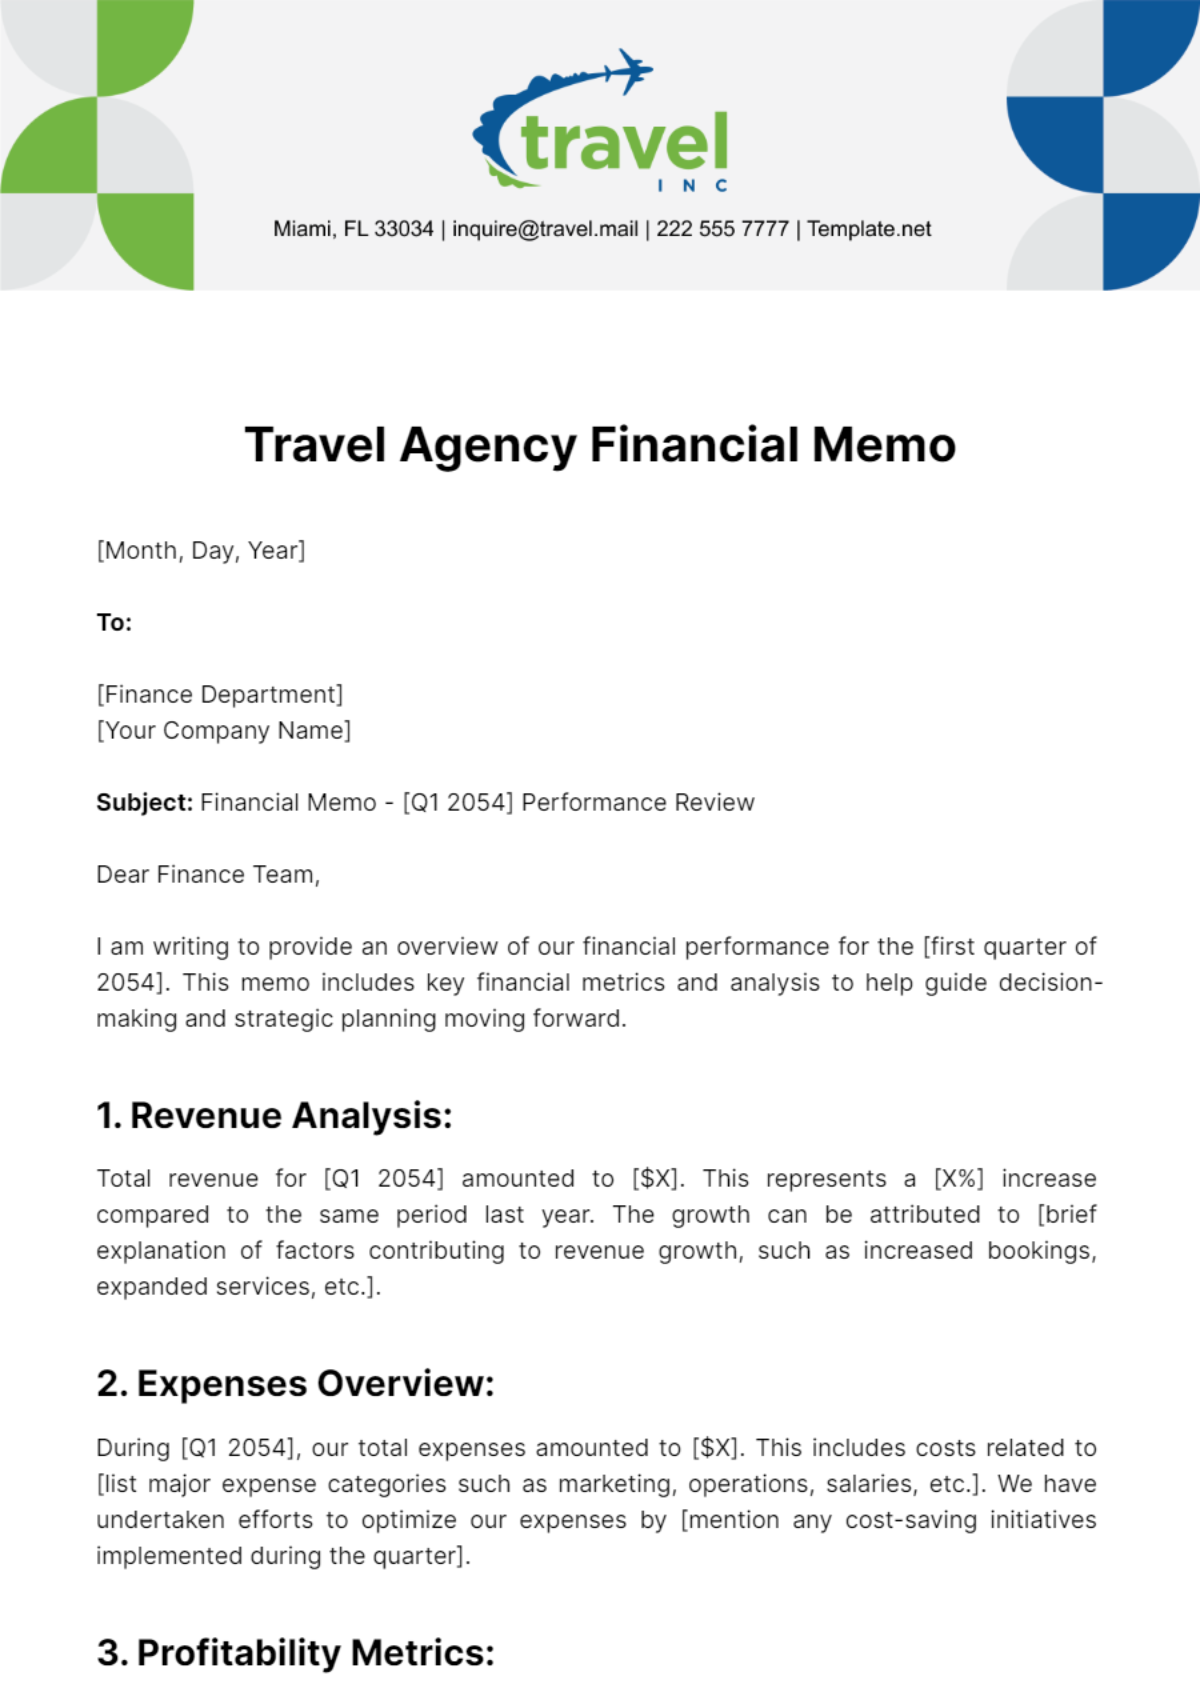 Travel Agency Financial Memo Template